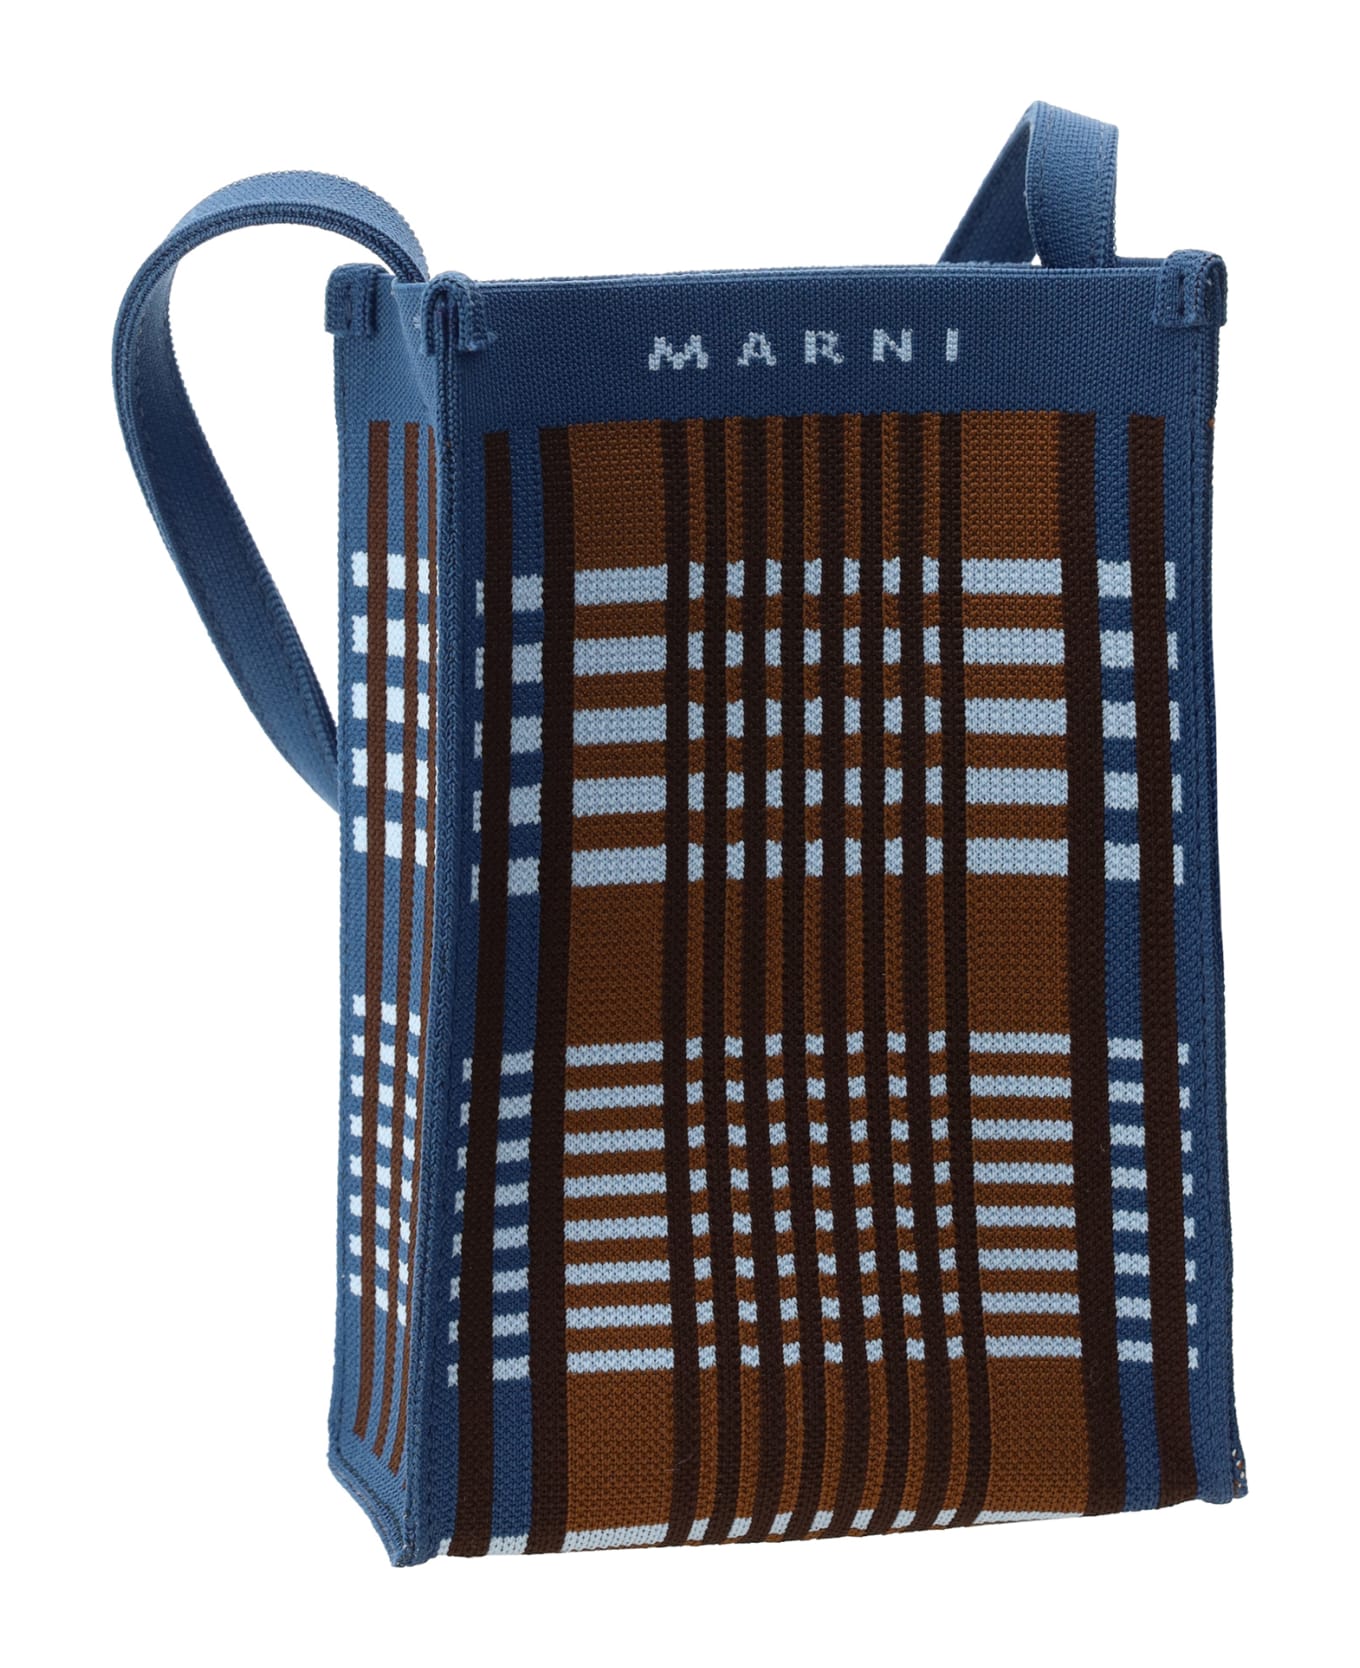 Marni Shoulder Bag - Light Blue/rust ショルダーバッグ